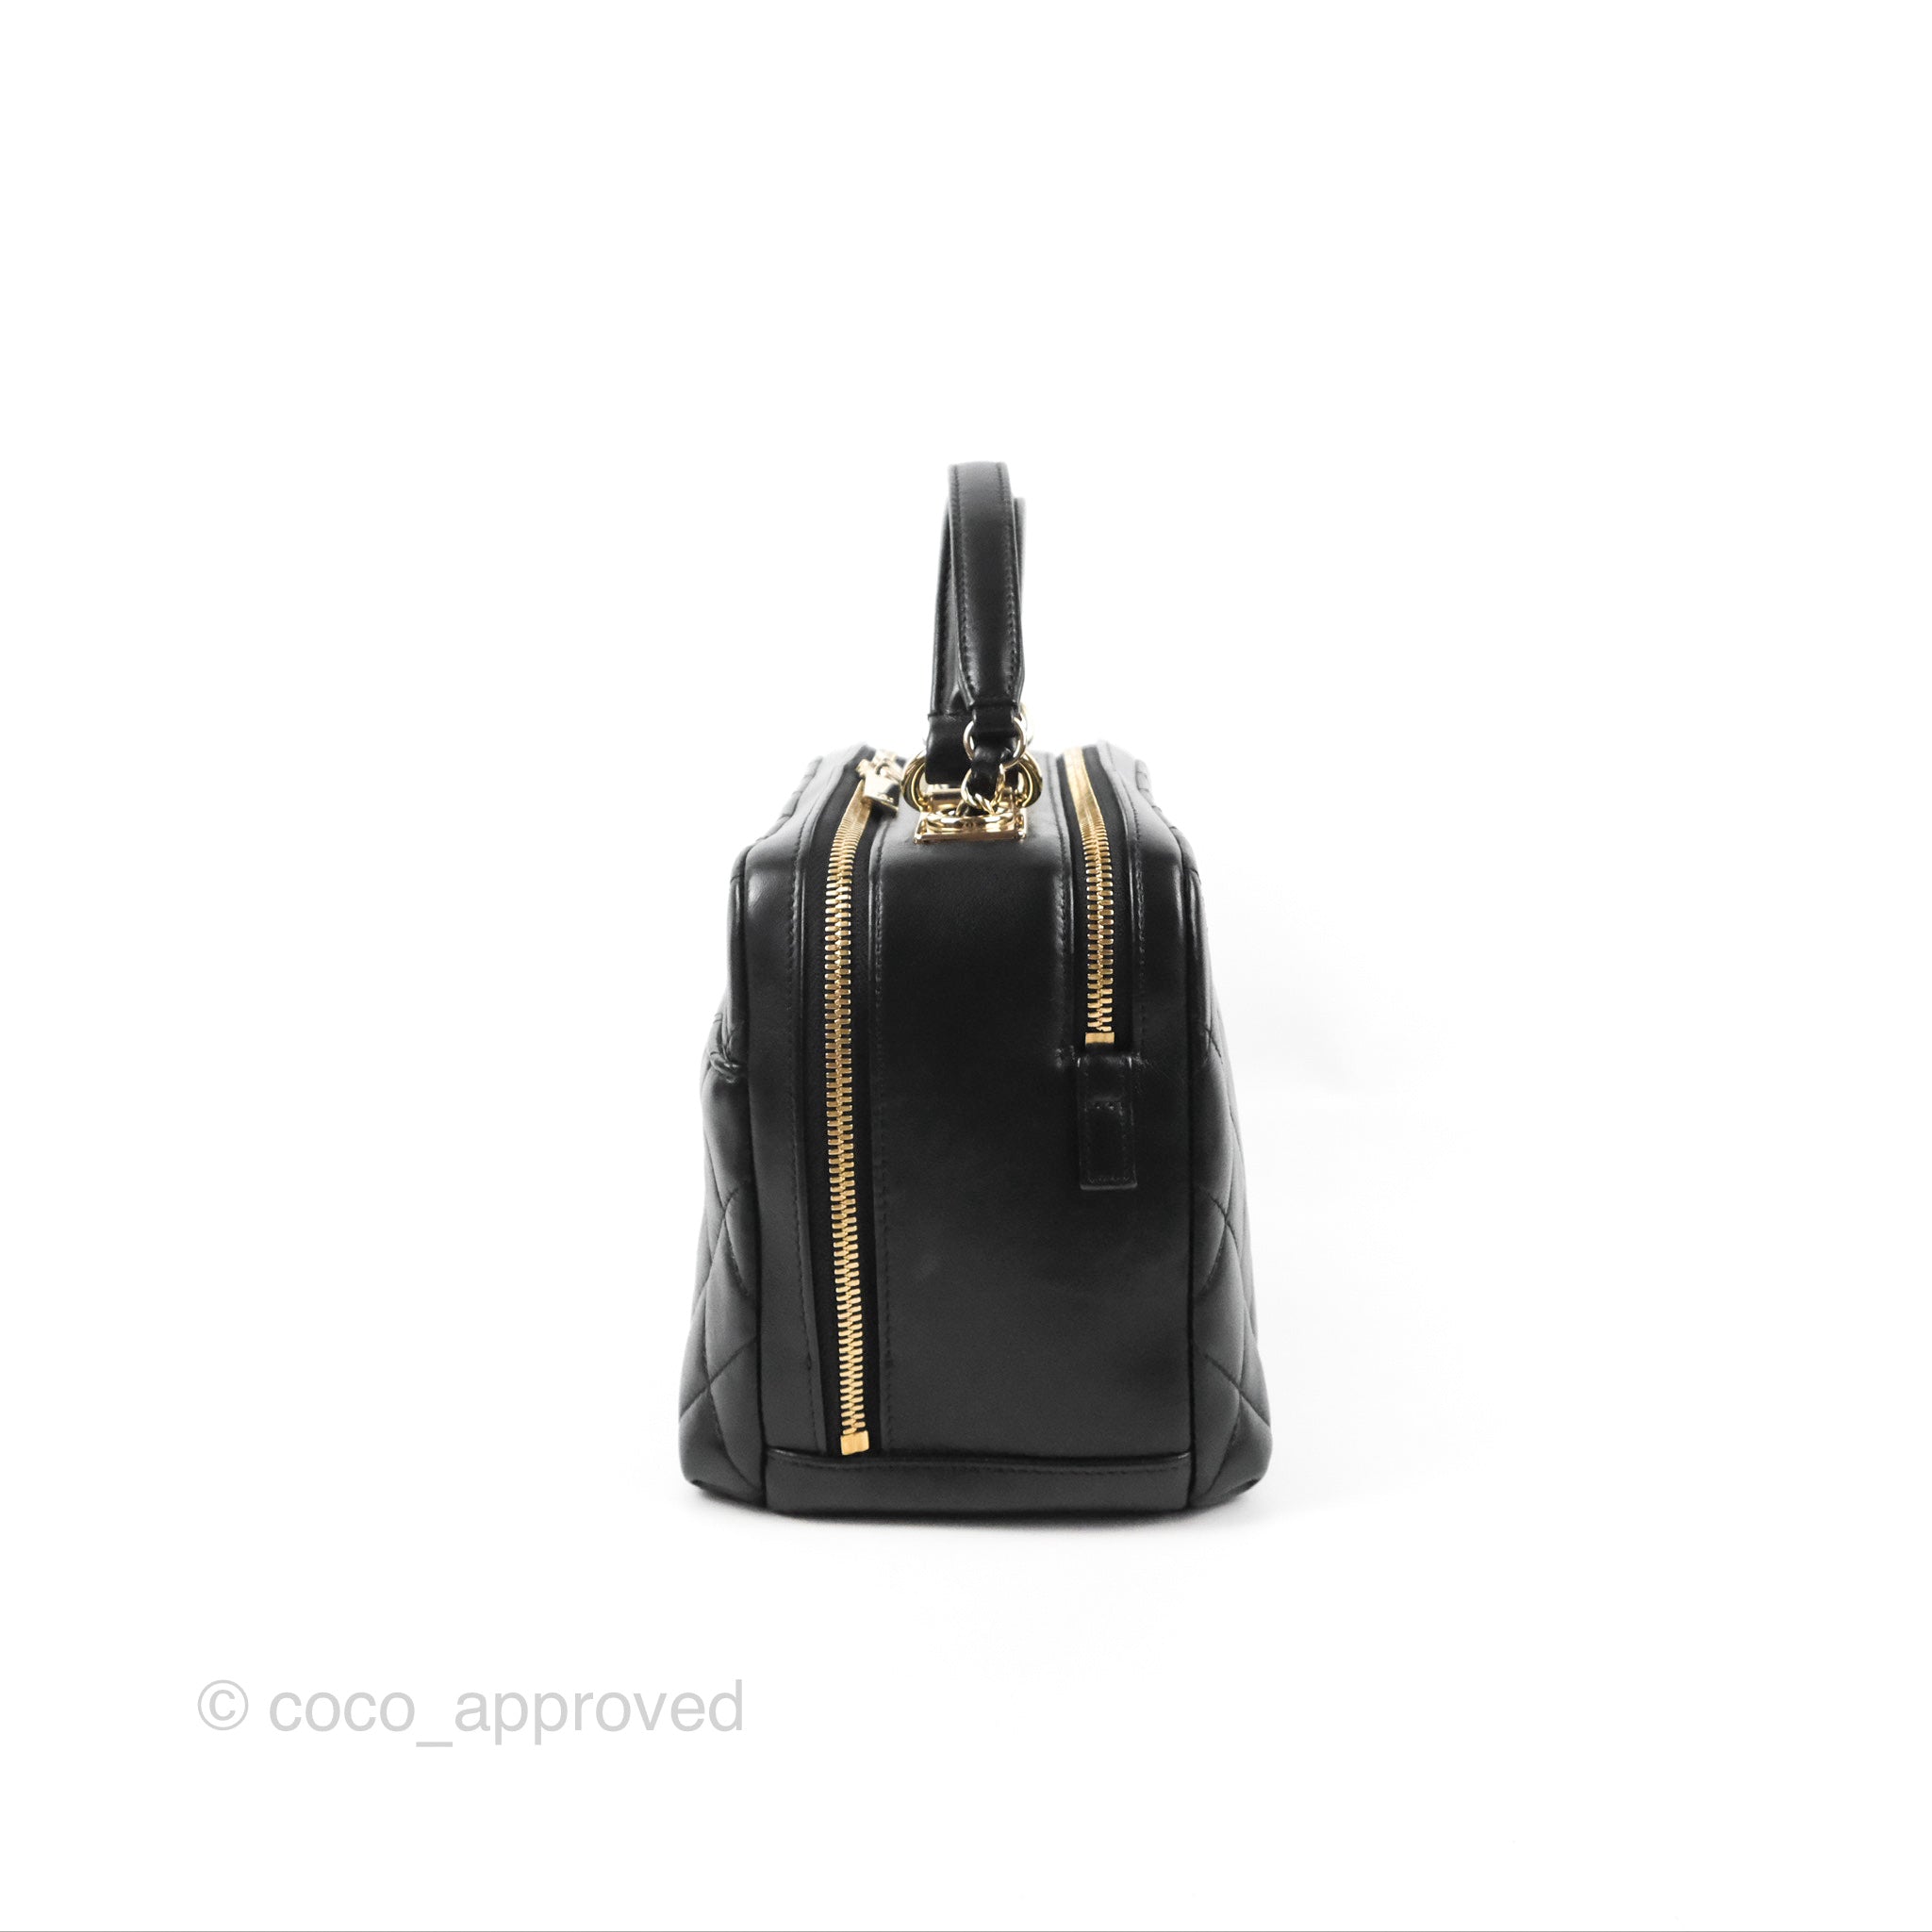 Chanel Calfskin Small Bowling Bag White Silver Hardware – Coco